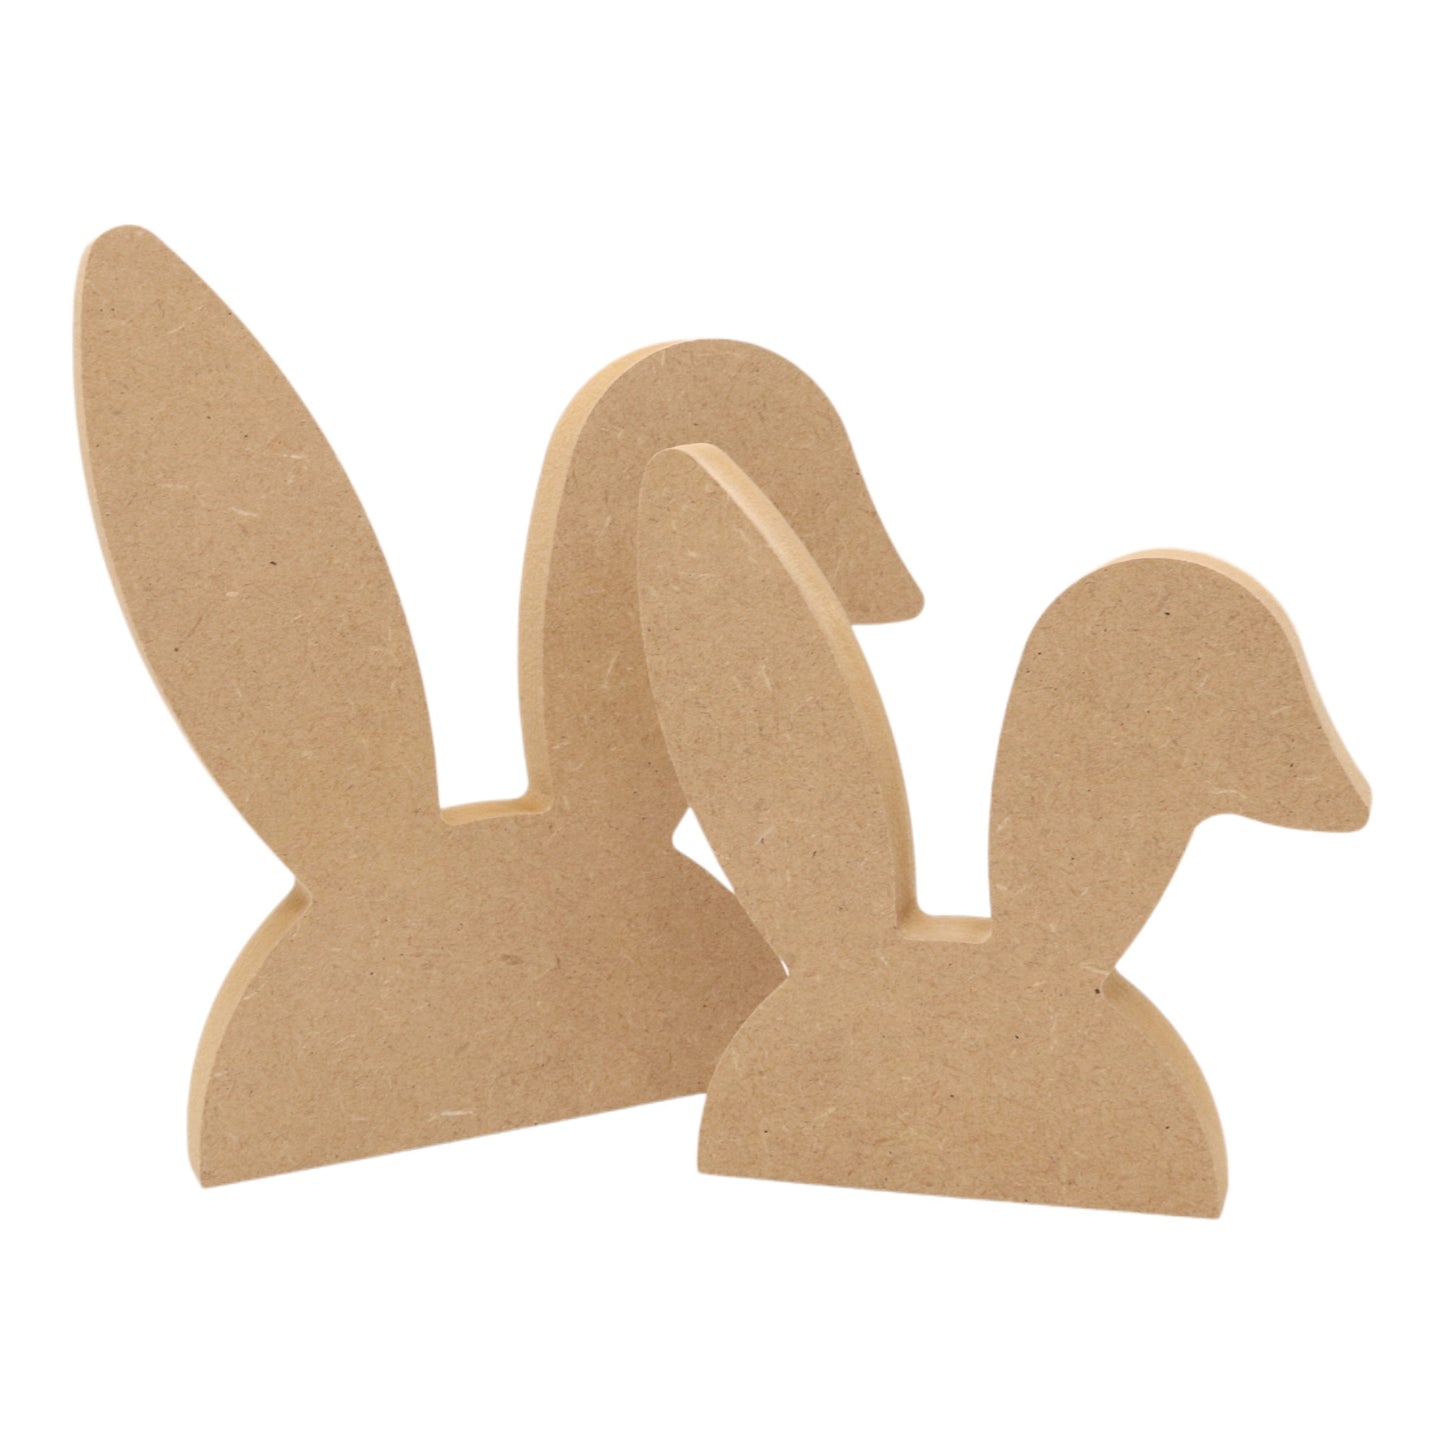 MDF Freestanding Bunny Ears Shape